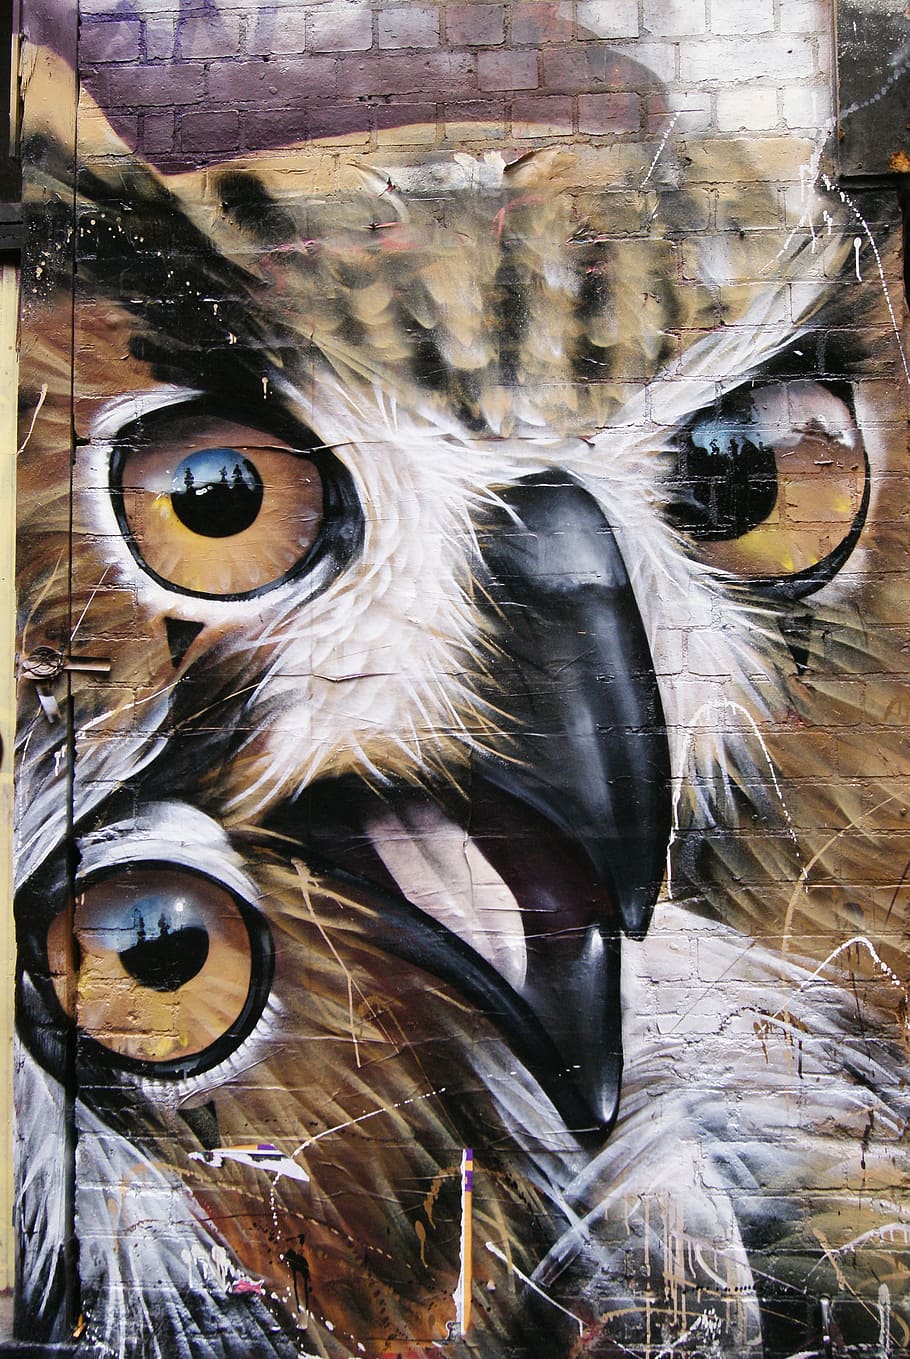 Streetart, Artwork, Artistic, grafitti, city, creativity, owl, building, creative, one animal